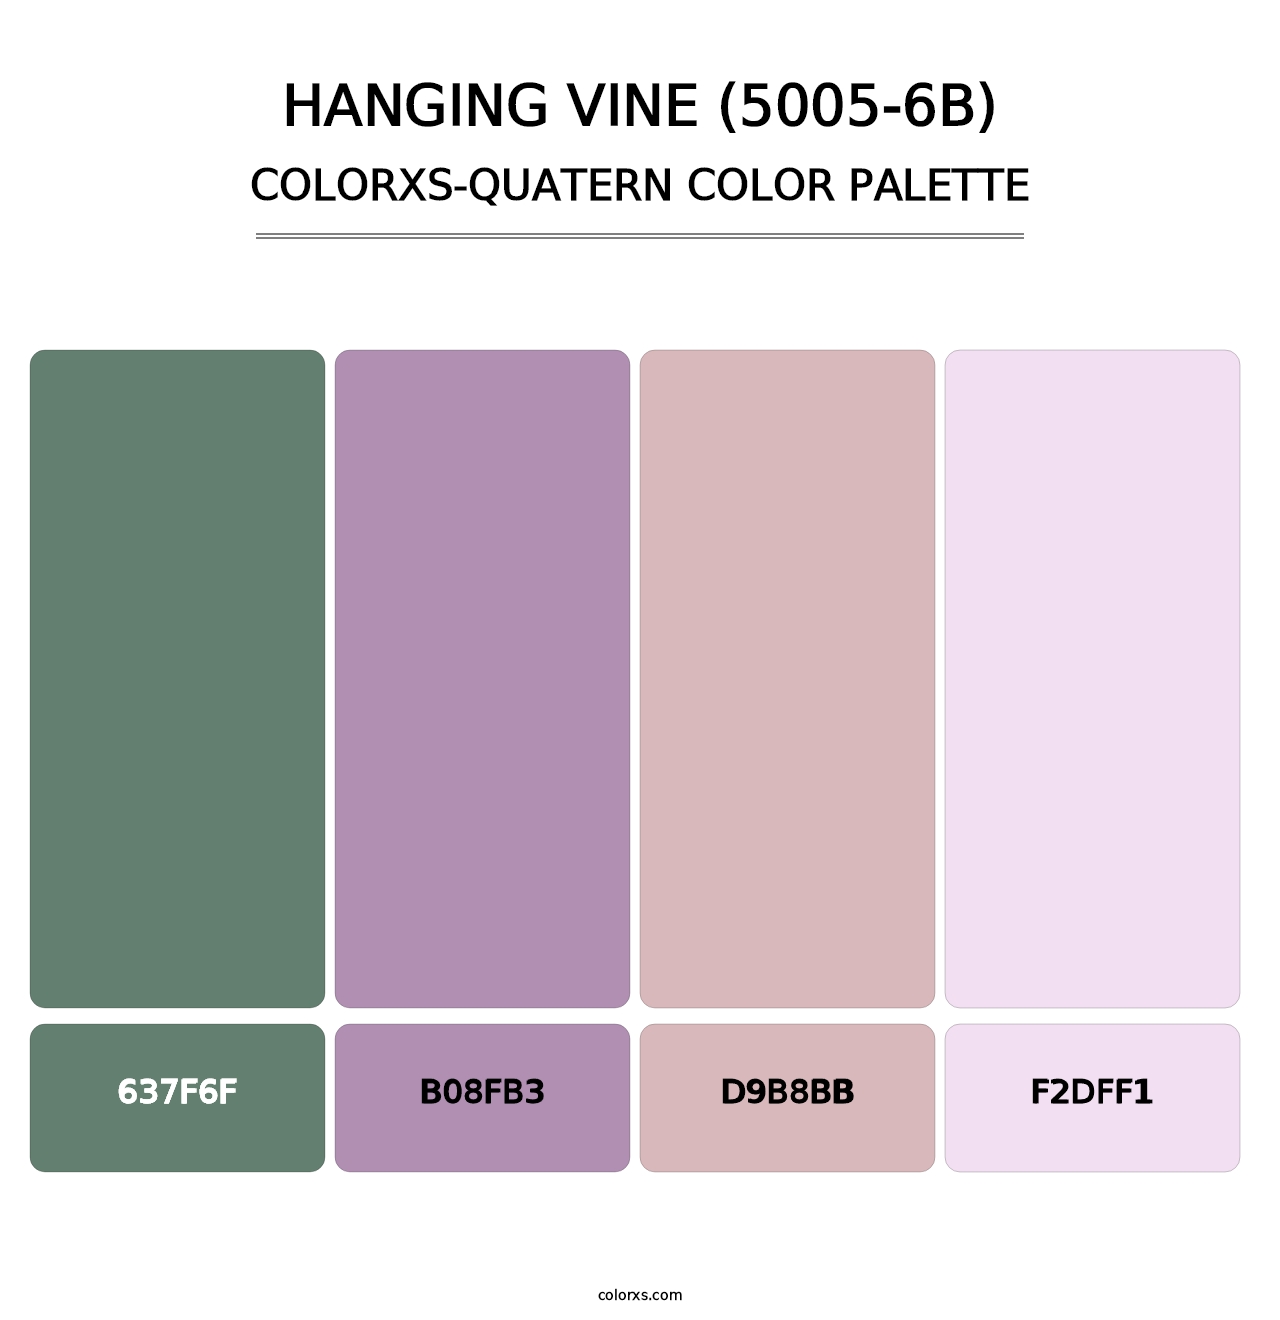 Hanging Vine (5005-6B) - Colorxs Quatern Palette